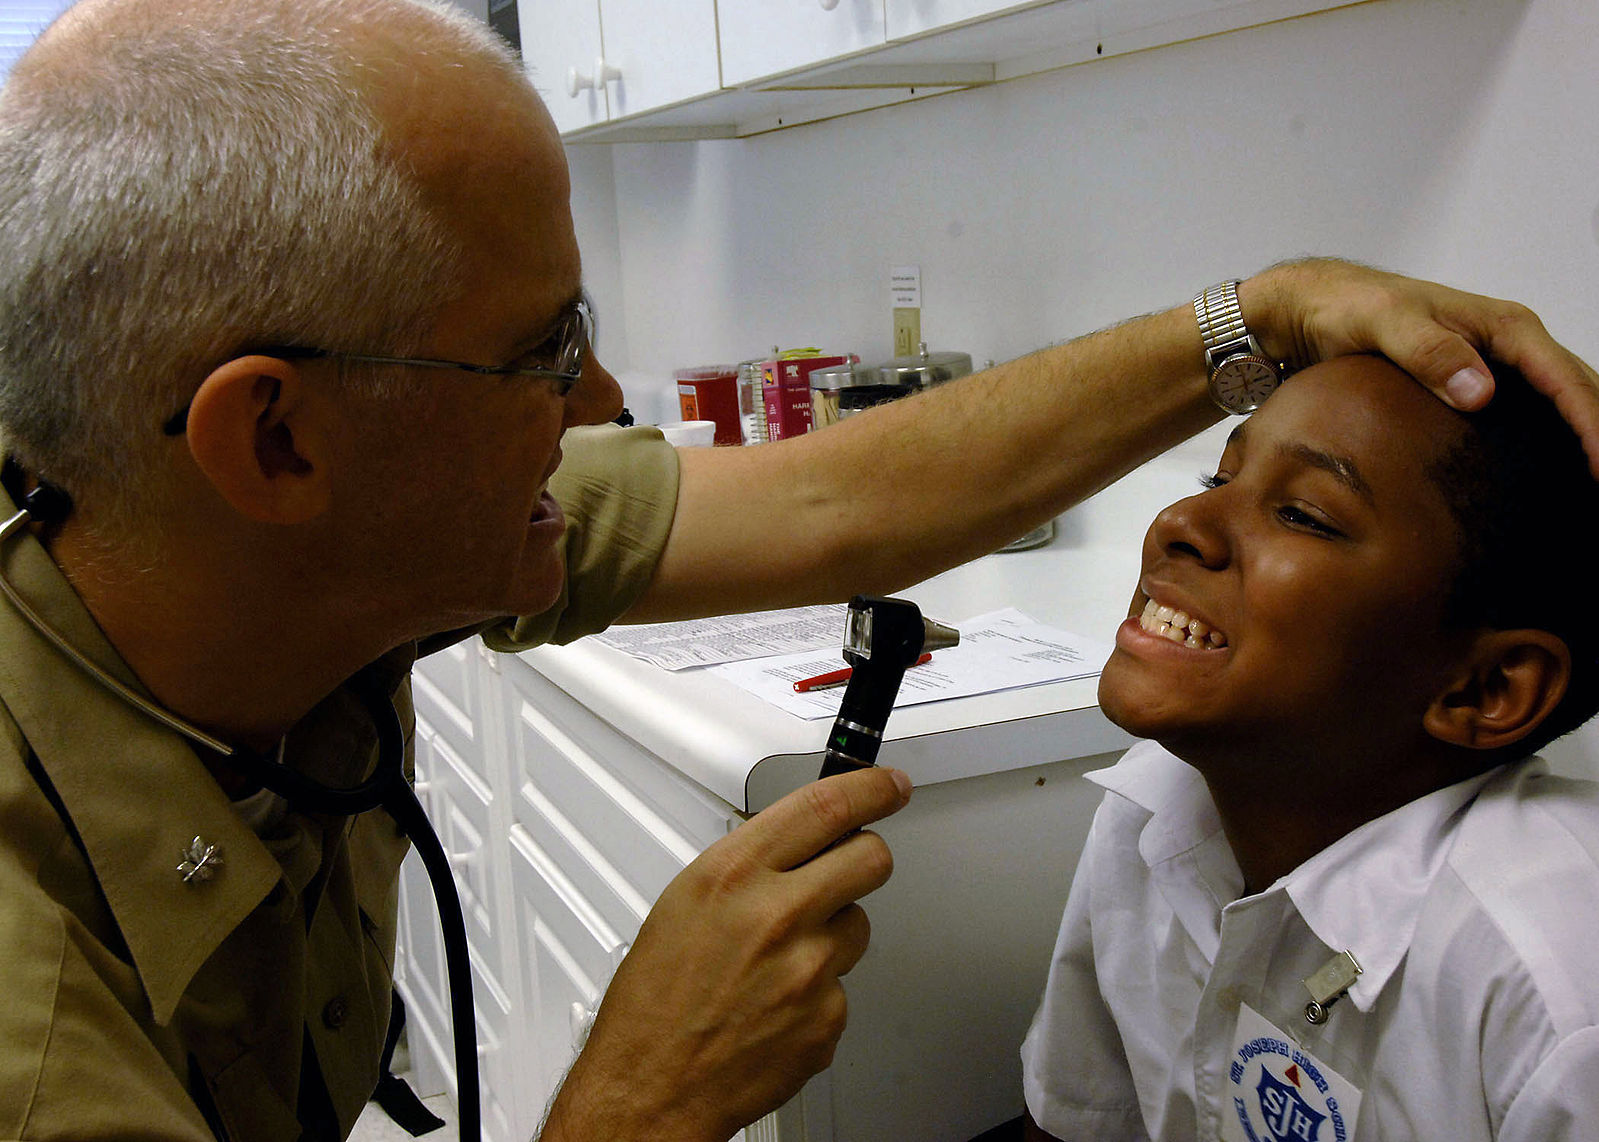 A pediatrician examining a child's teeth.